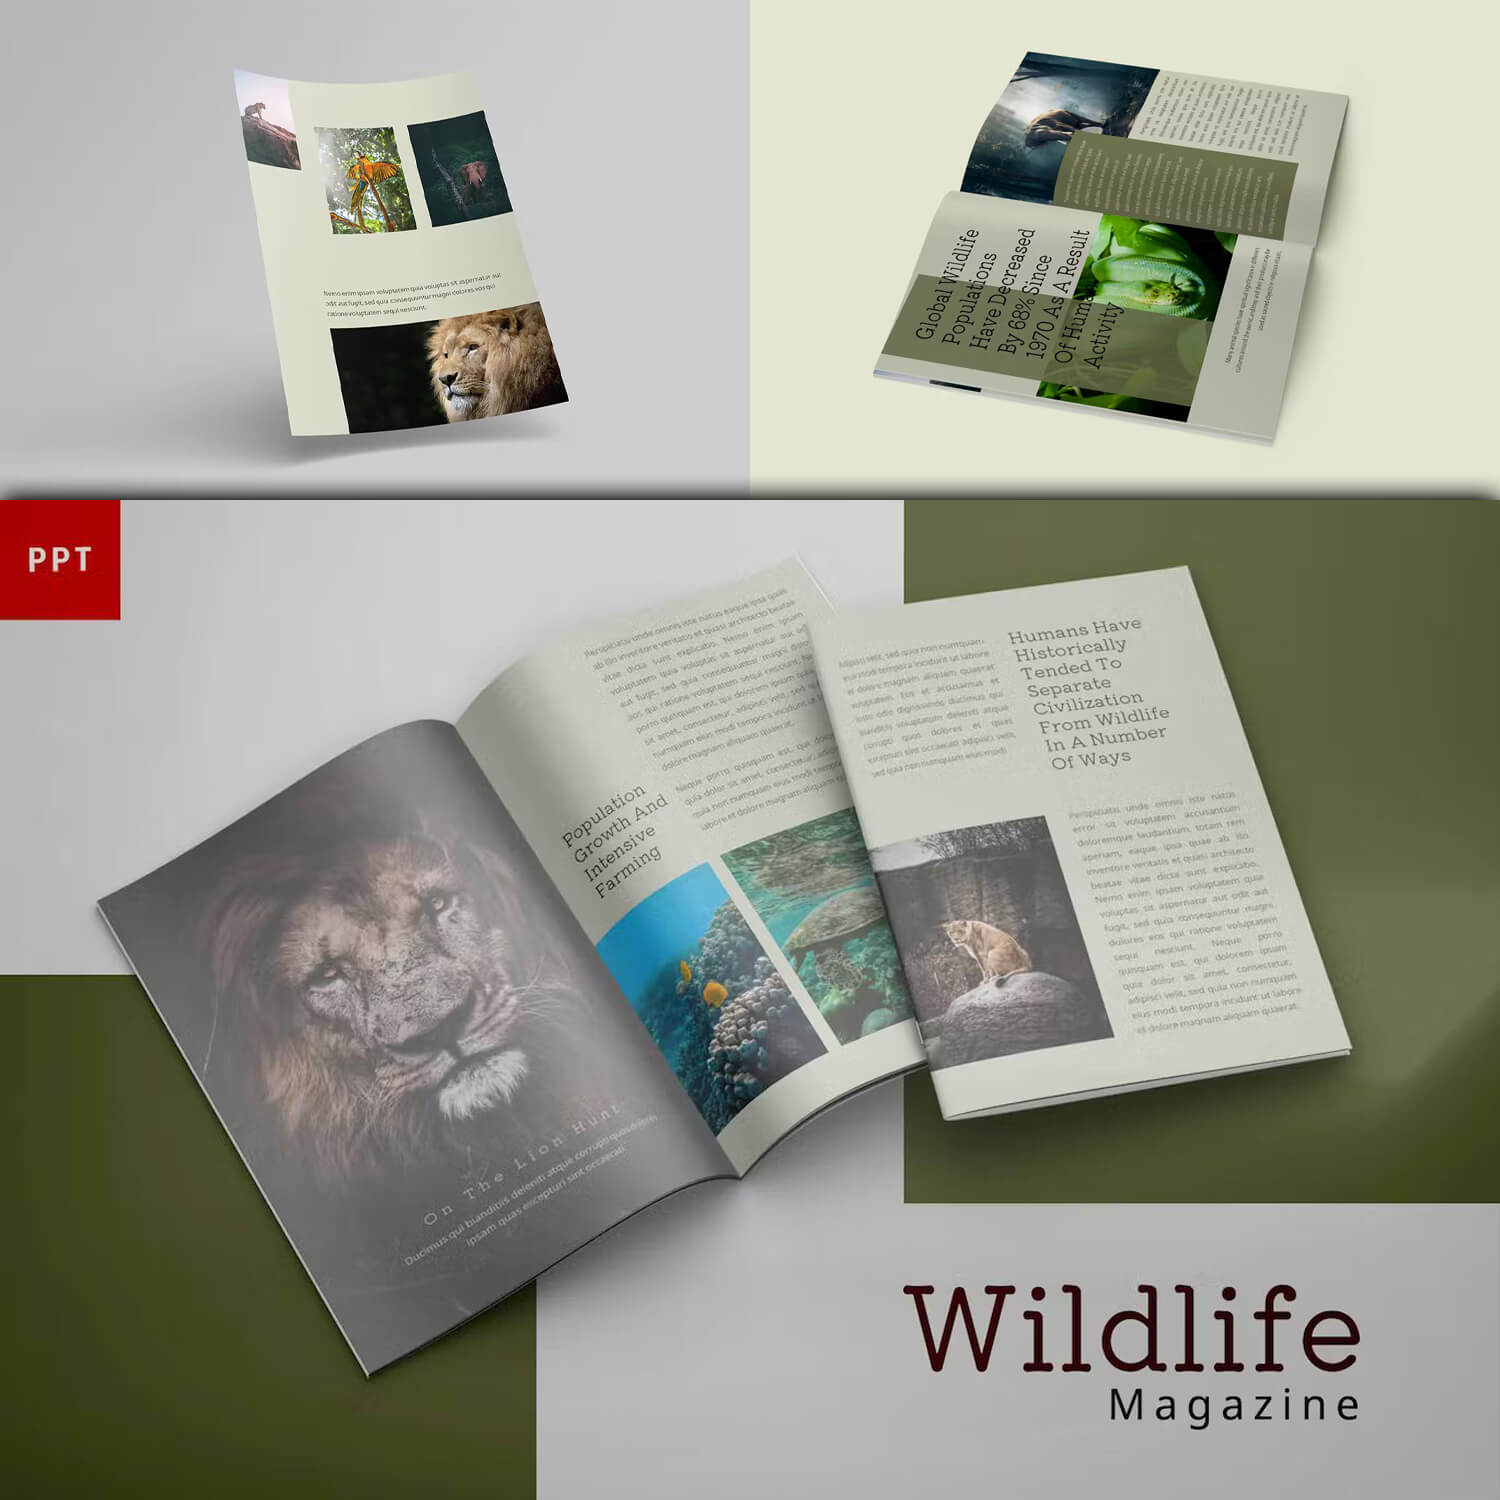 Examples of wildlife magazine articles.